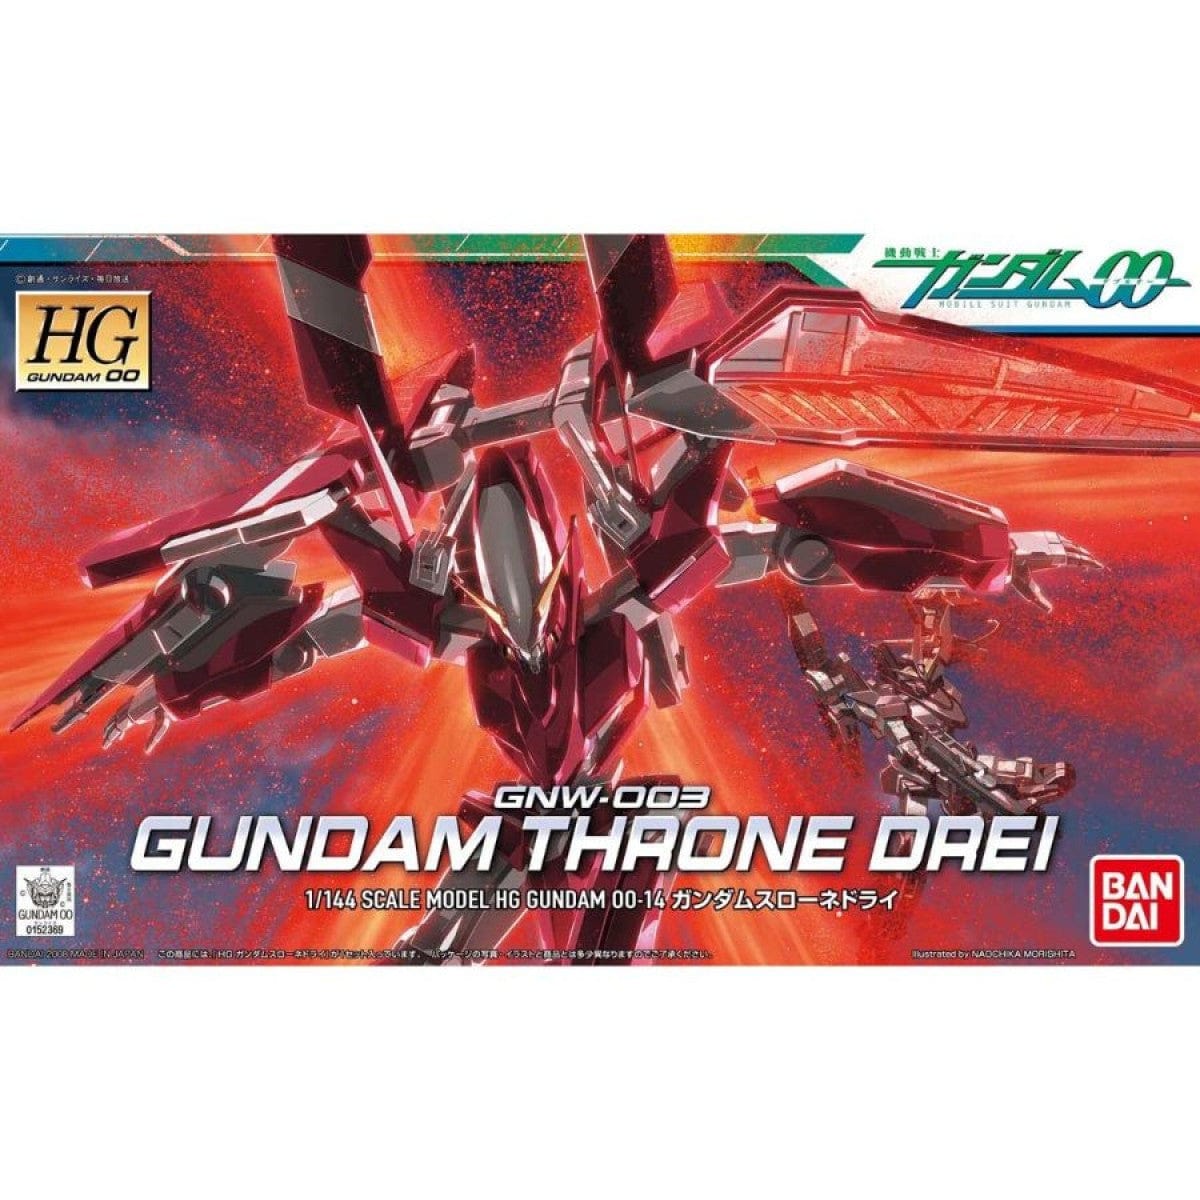 Bandai: Gundam - Gundam Throne DREI 1:144